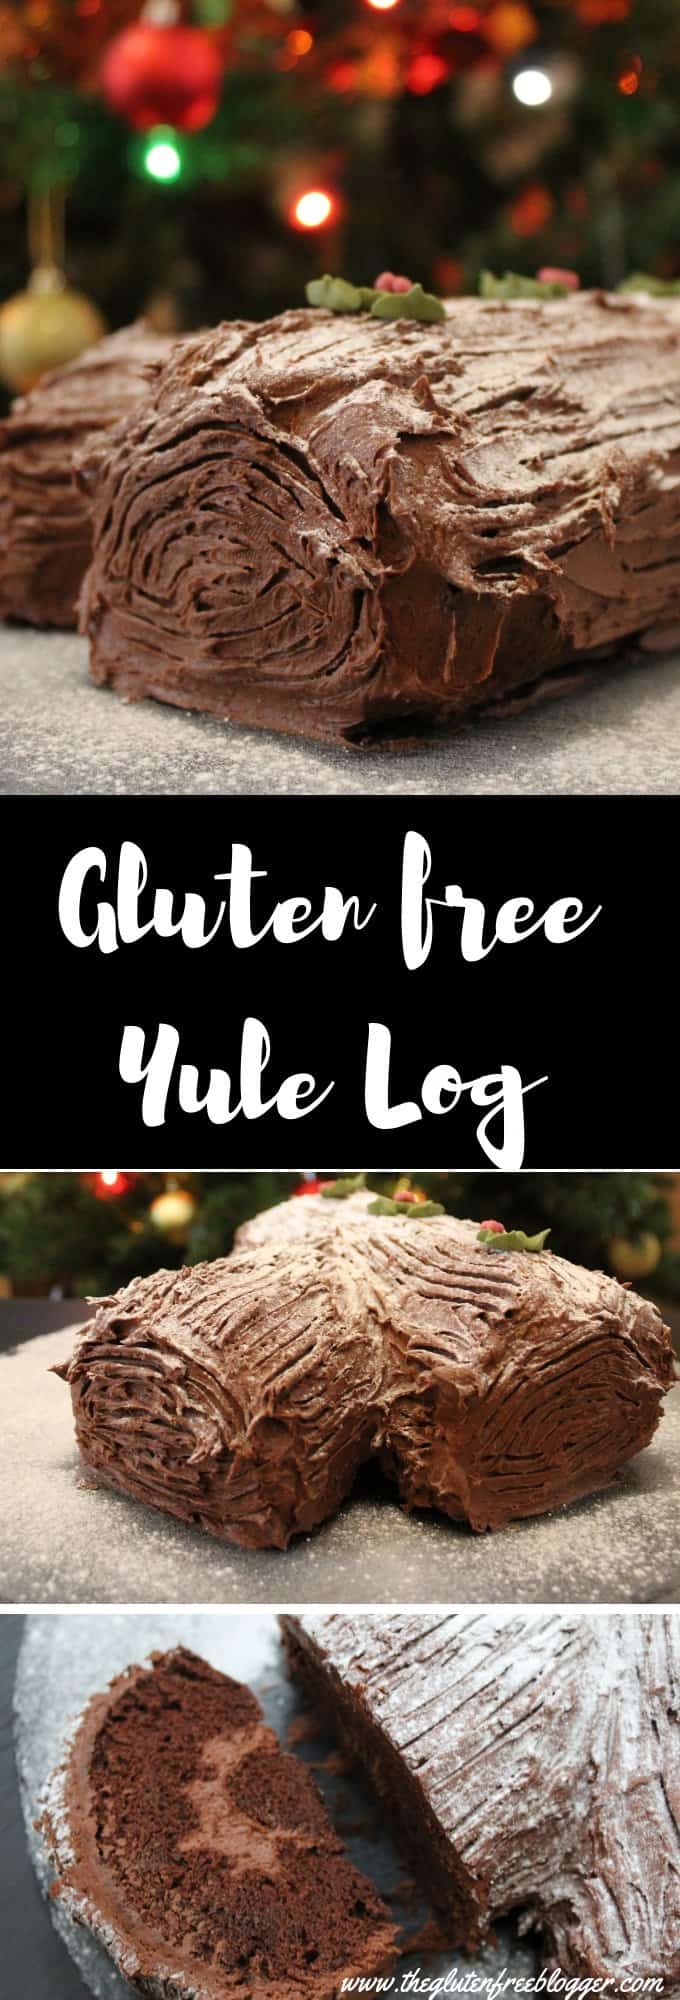 gluten free yule log recipe - christmas recipe - gluten free christmas - coeliac